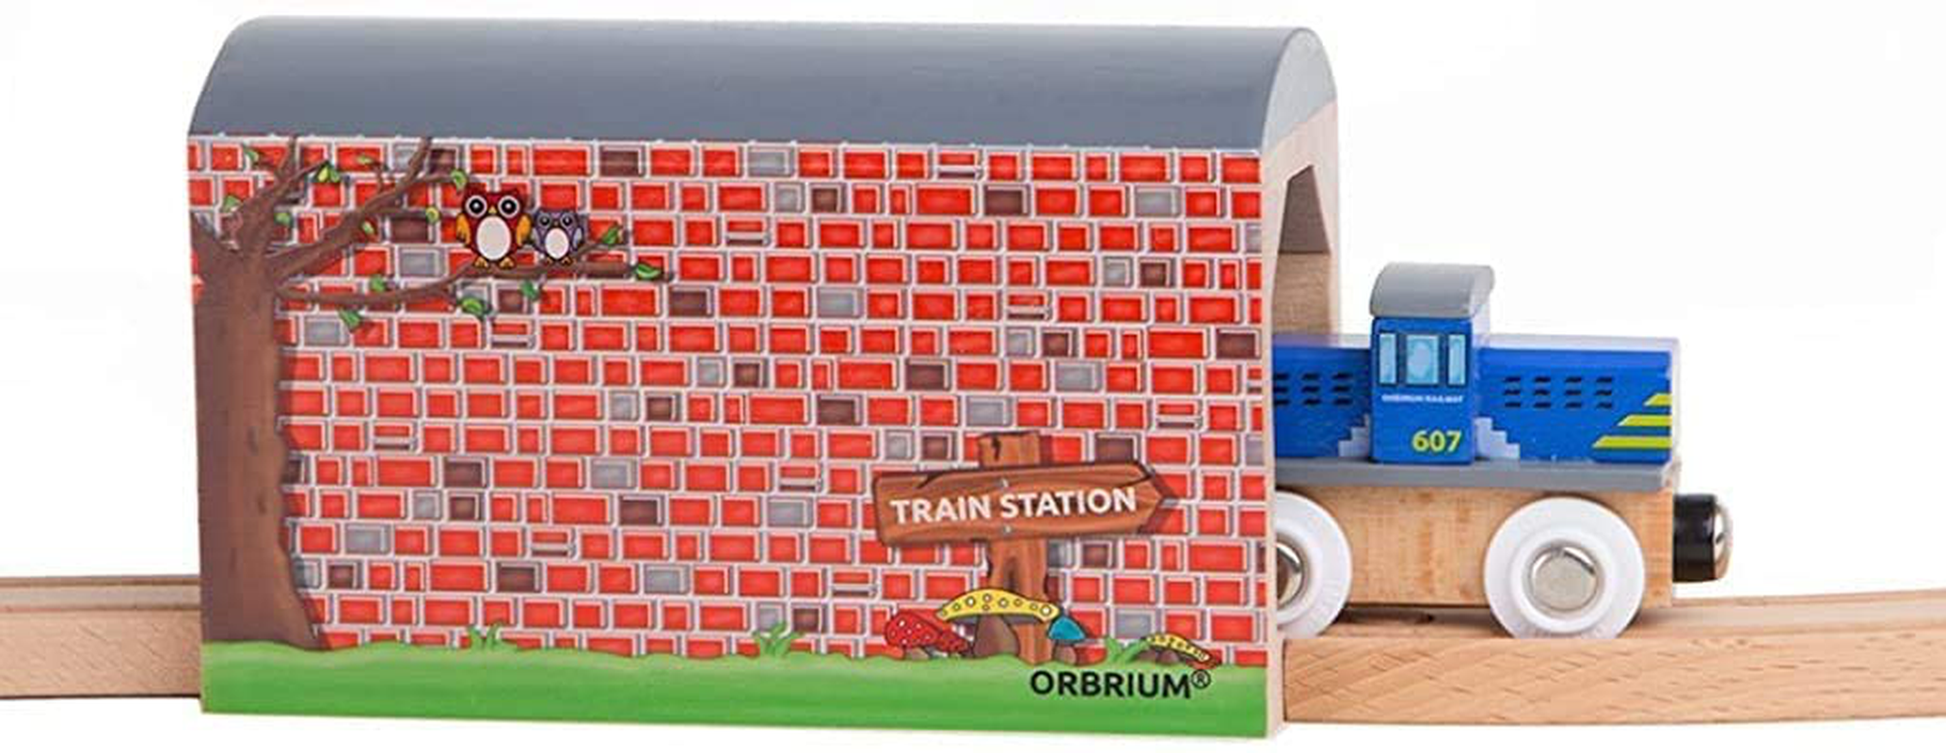 Orbrium Toys Large Wooden Train Tunnel for Wooden Railway Fits Thomas Brio Chuggington Melissa Doug Imaginarium